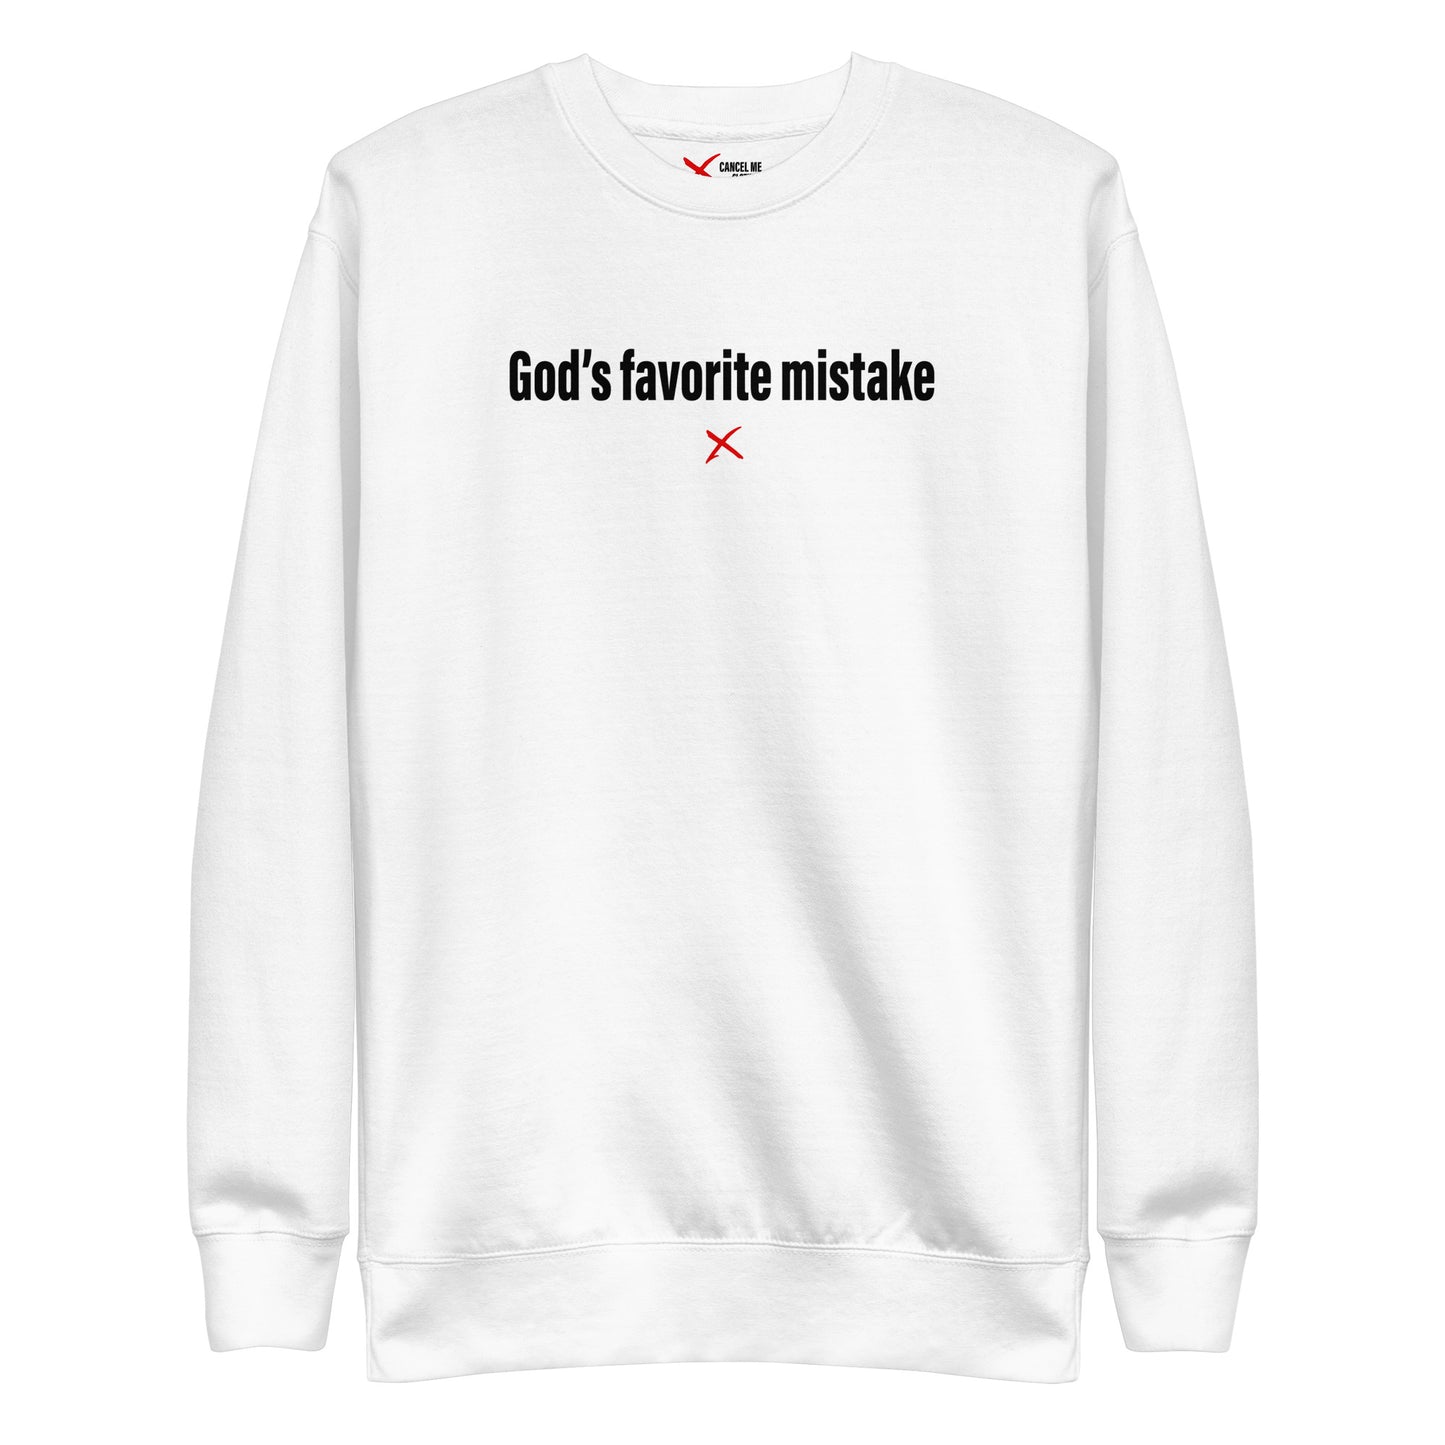 God's favorite mistake - Sweatshirt